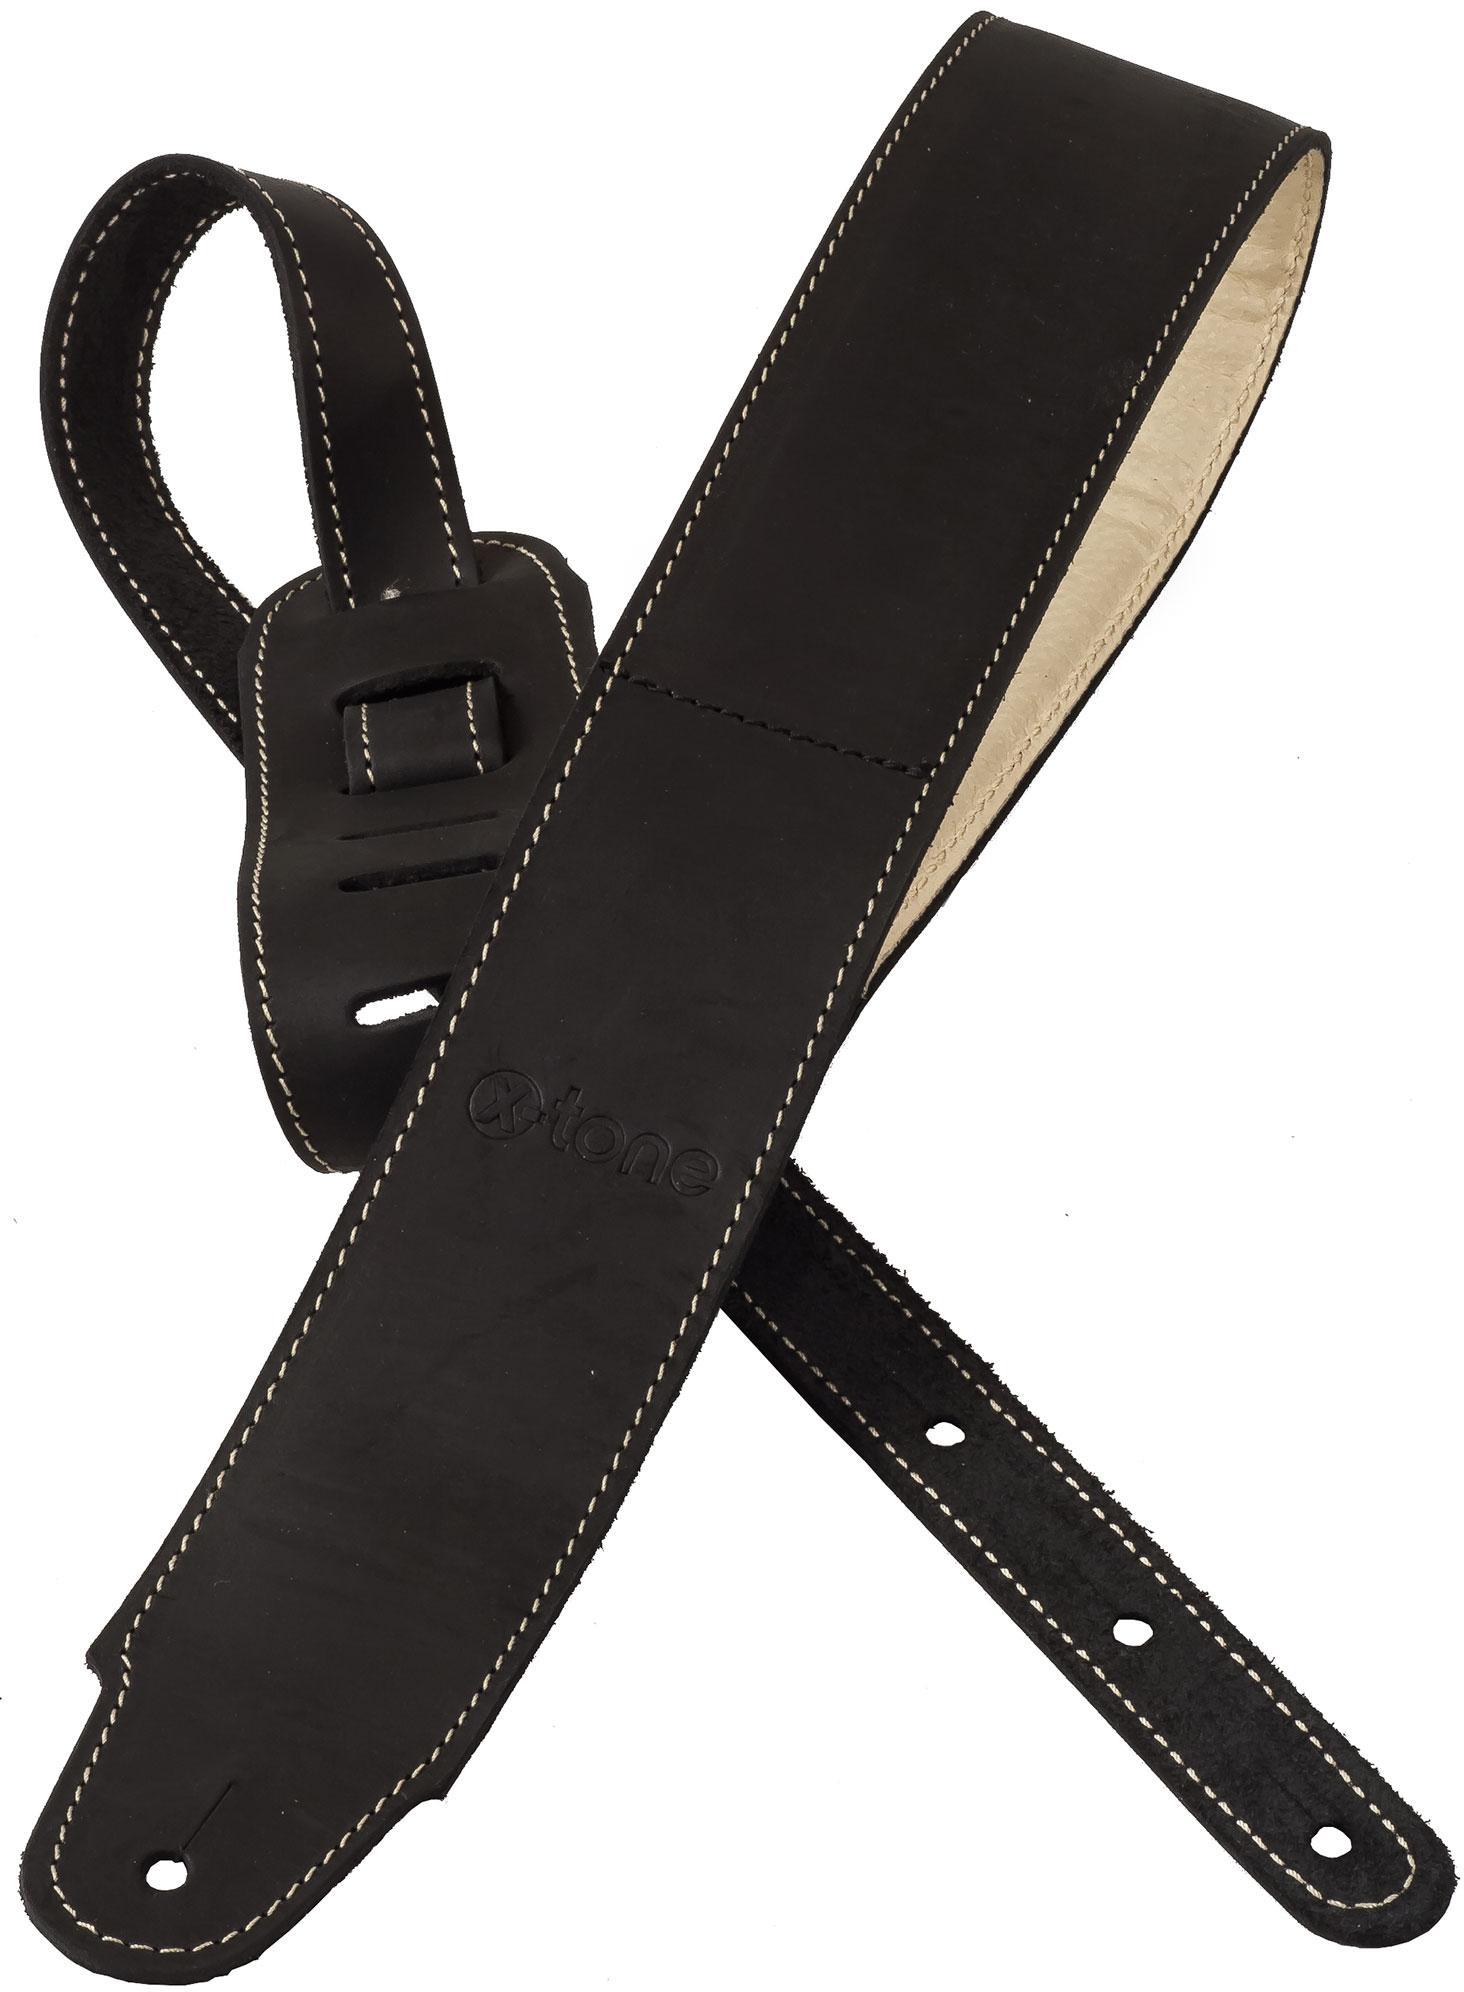 Sangle courroie X-tone xg 3157 Classic Plus Leather Guitar Strap - Black